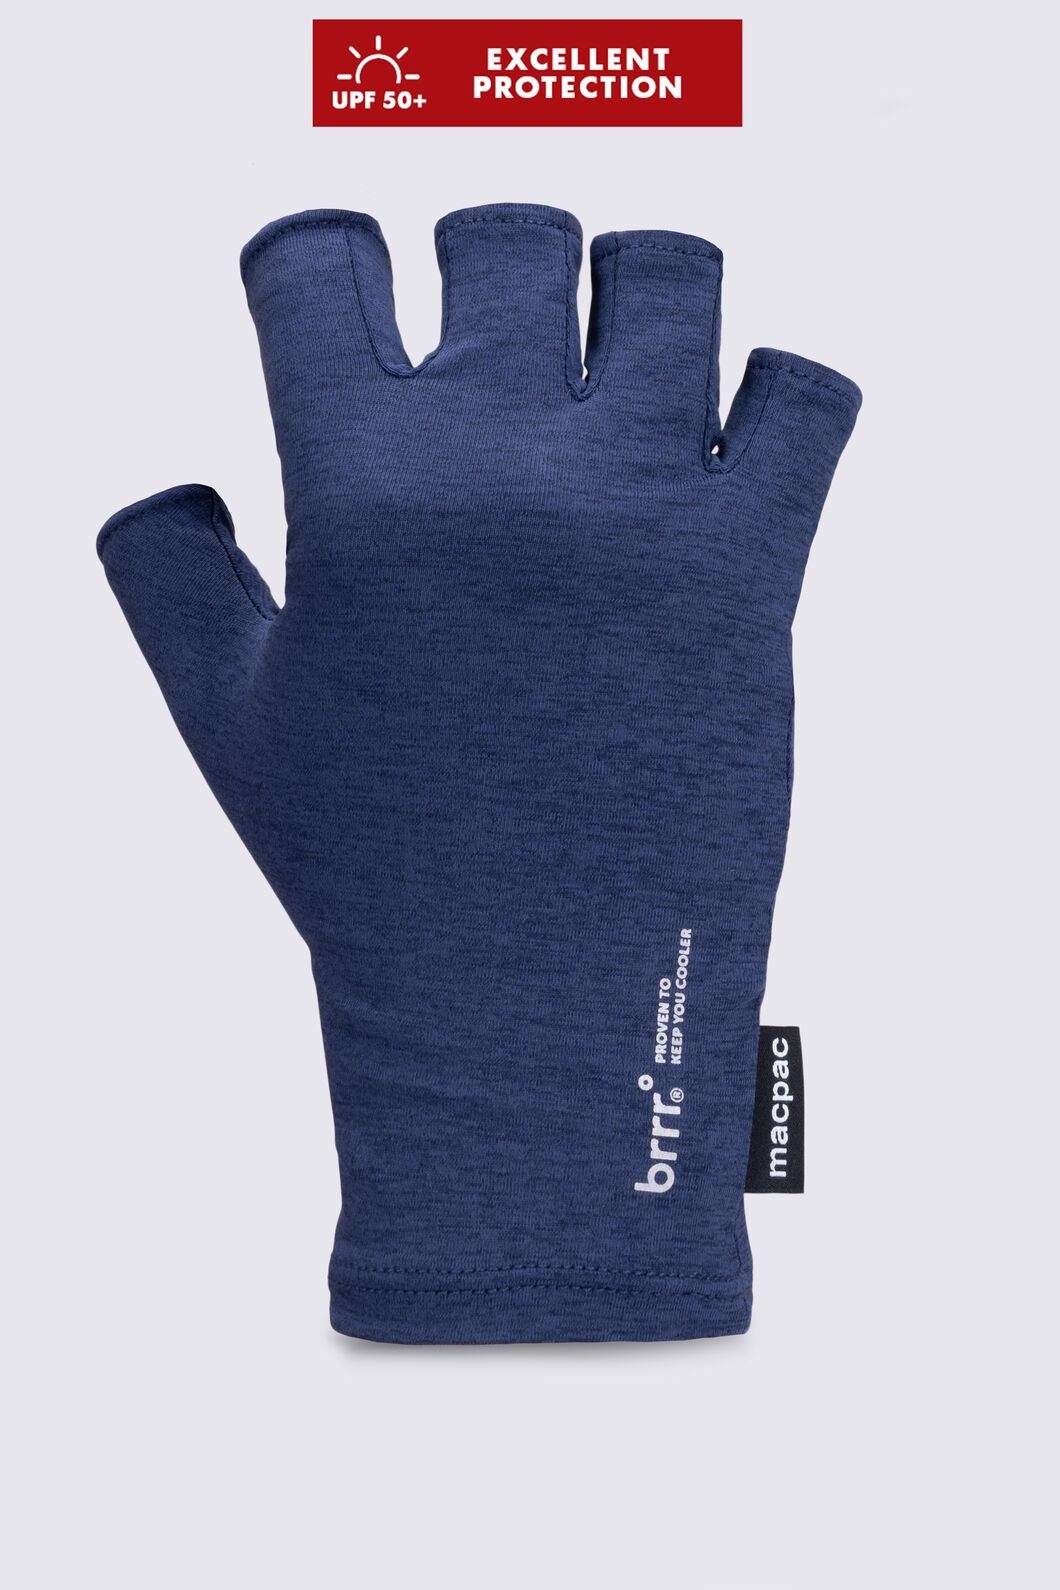 Macpac brrr° Gloves